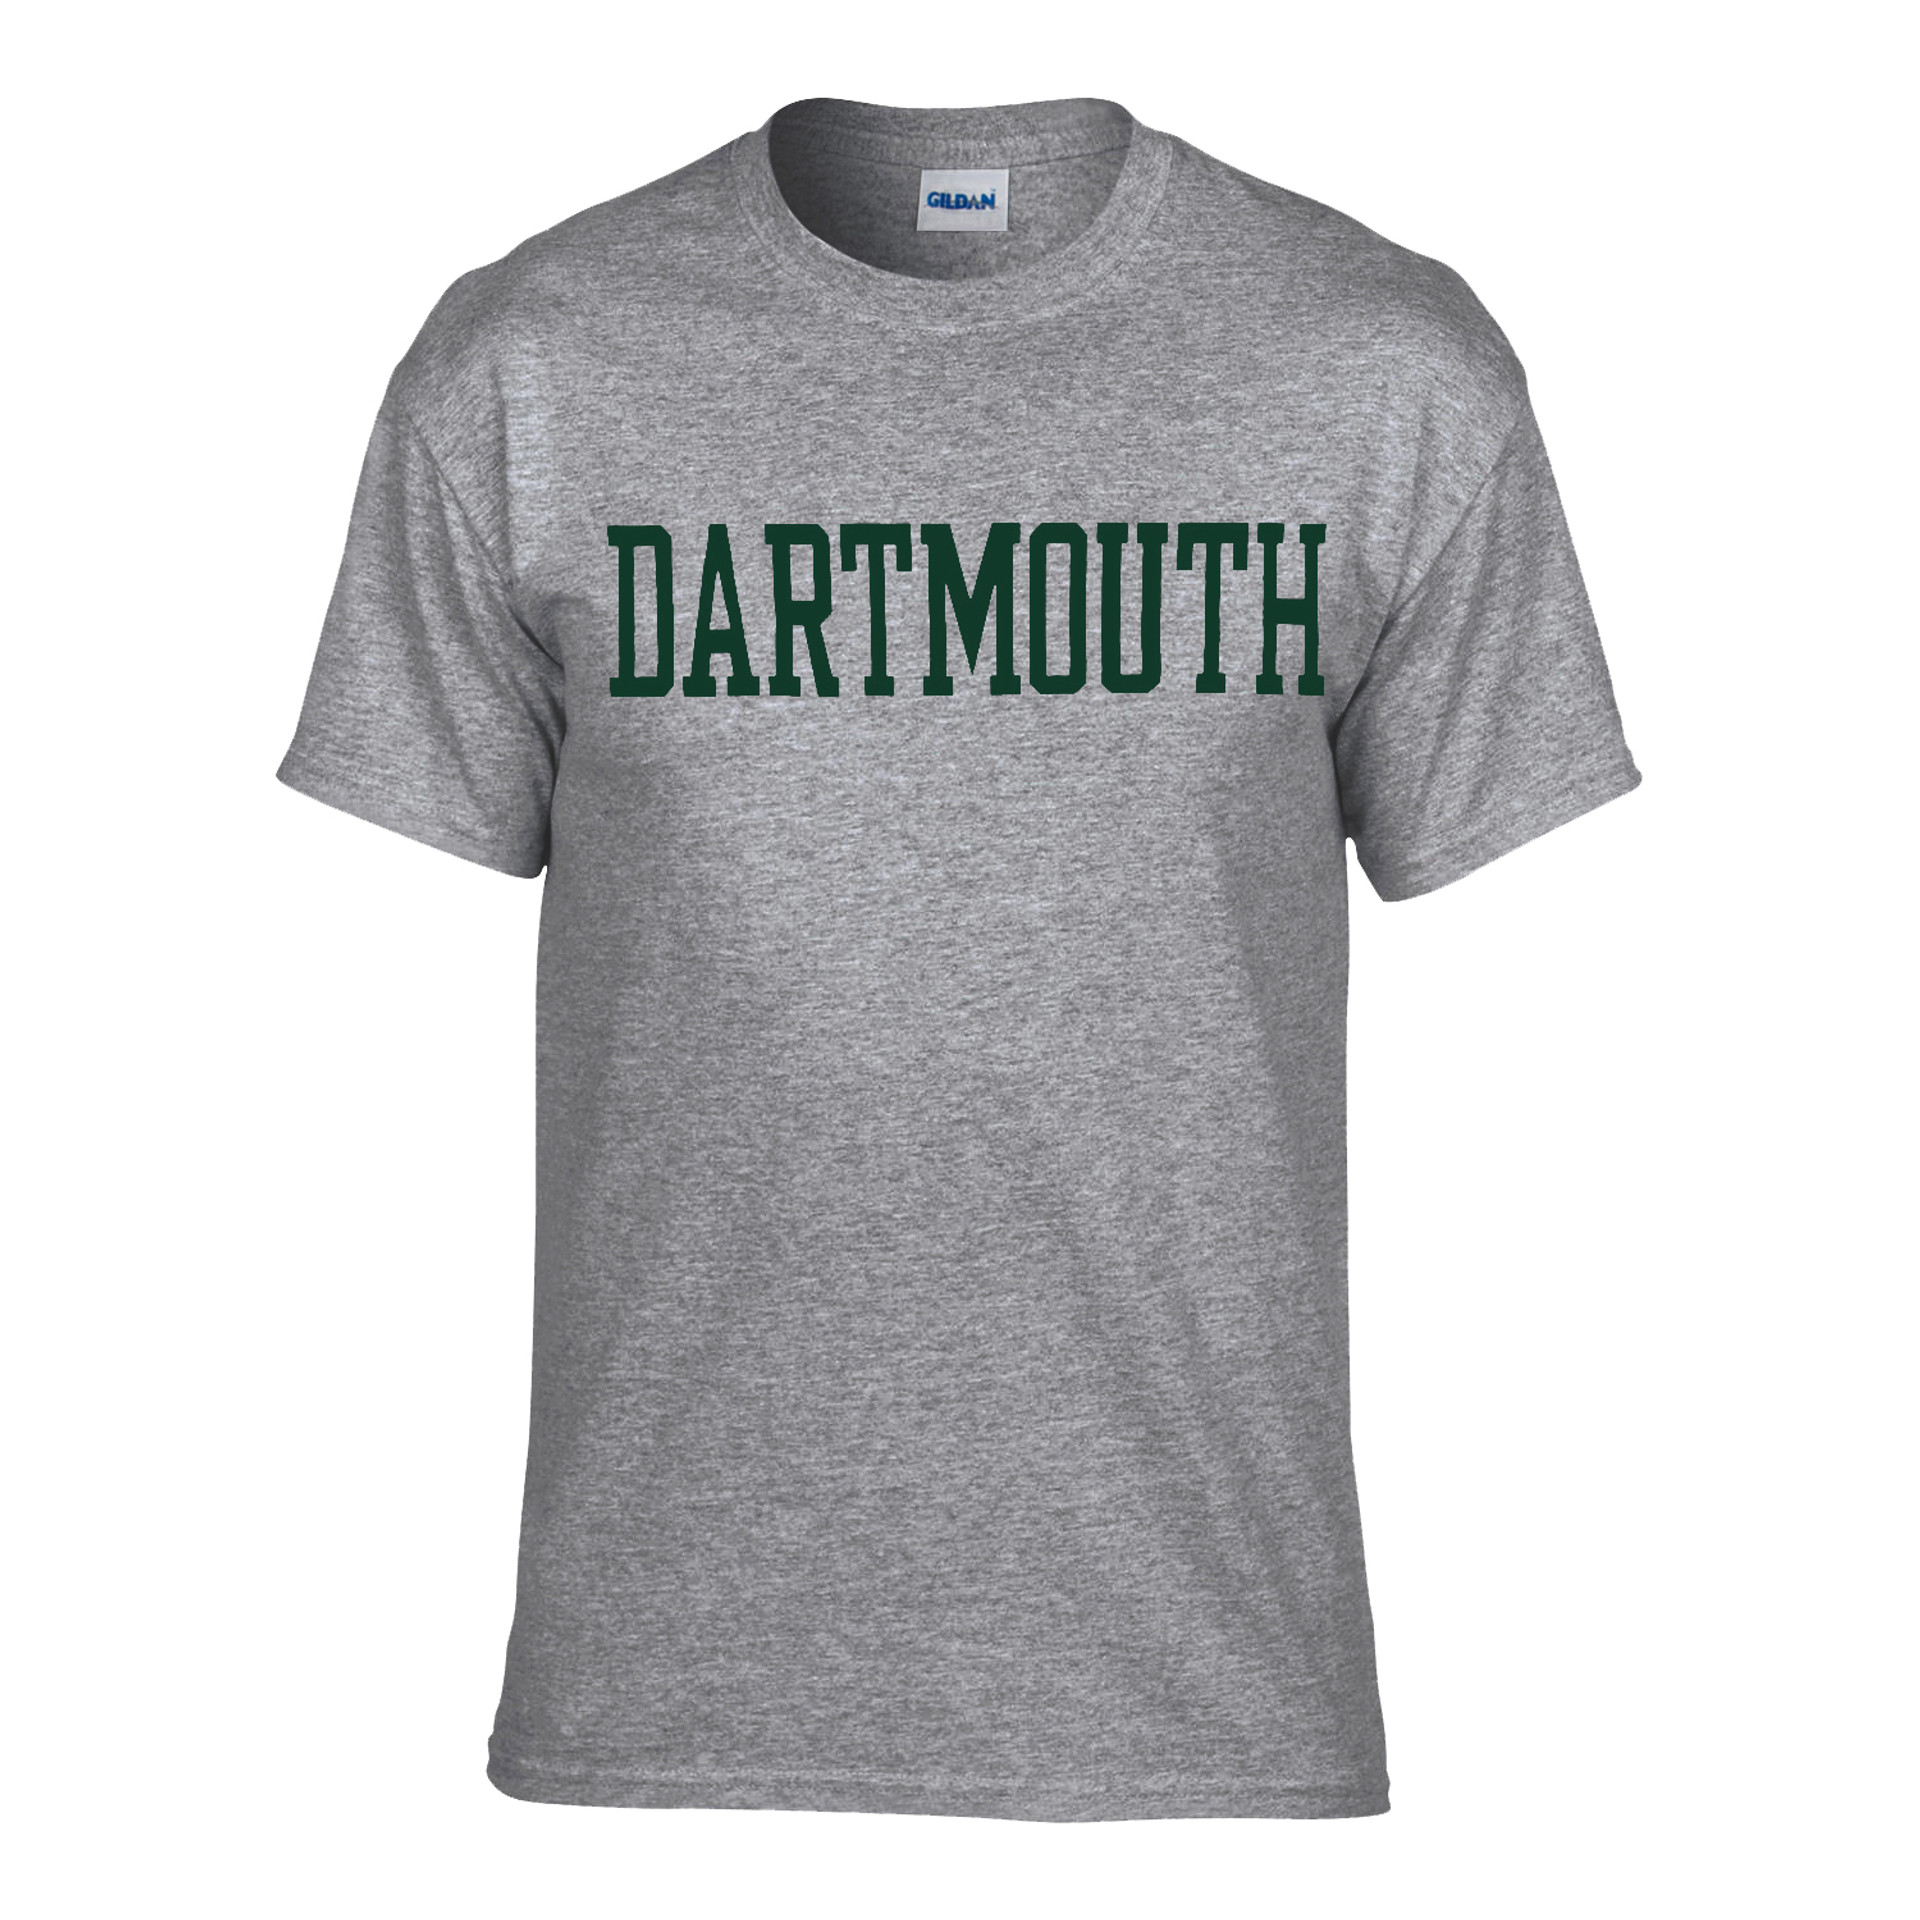 Dartmouth-shirt, t-shirts, Tee, College t-shirts with logo